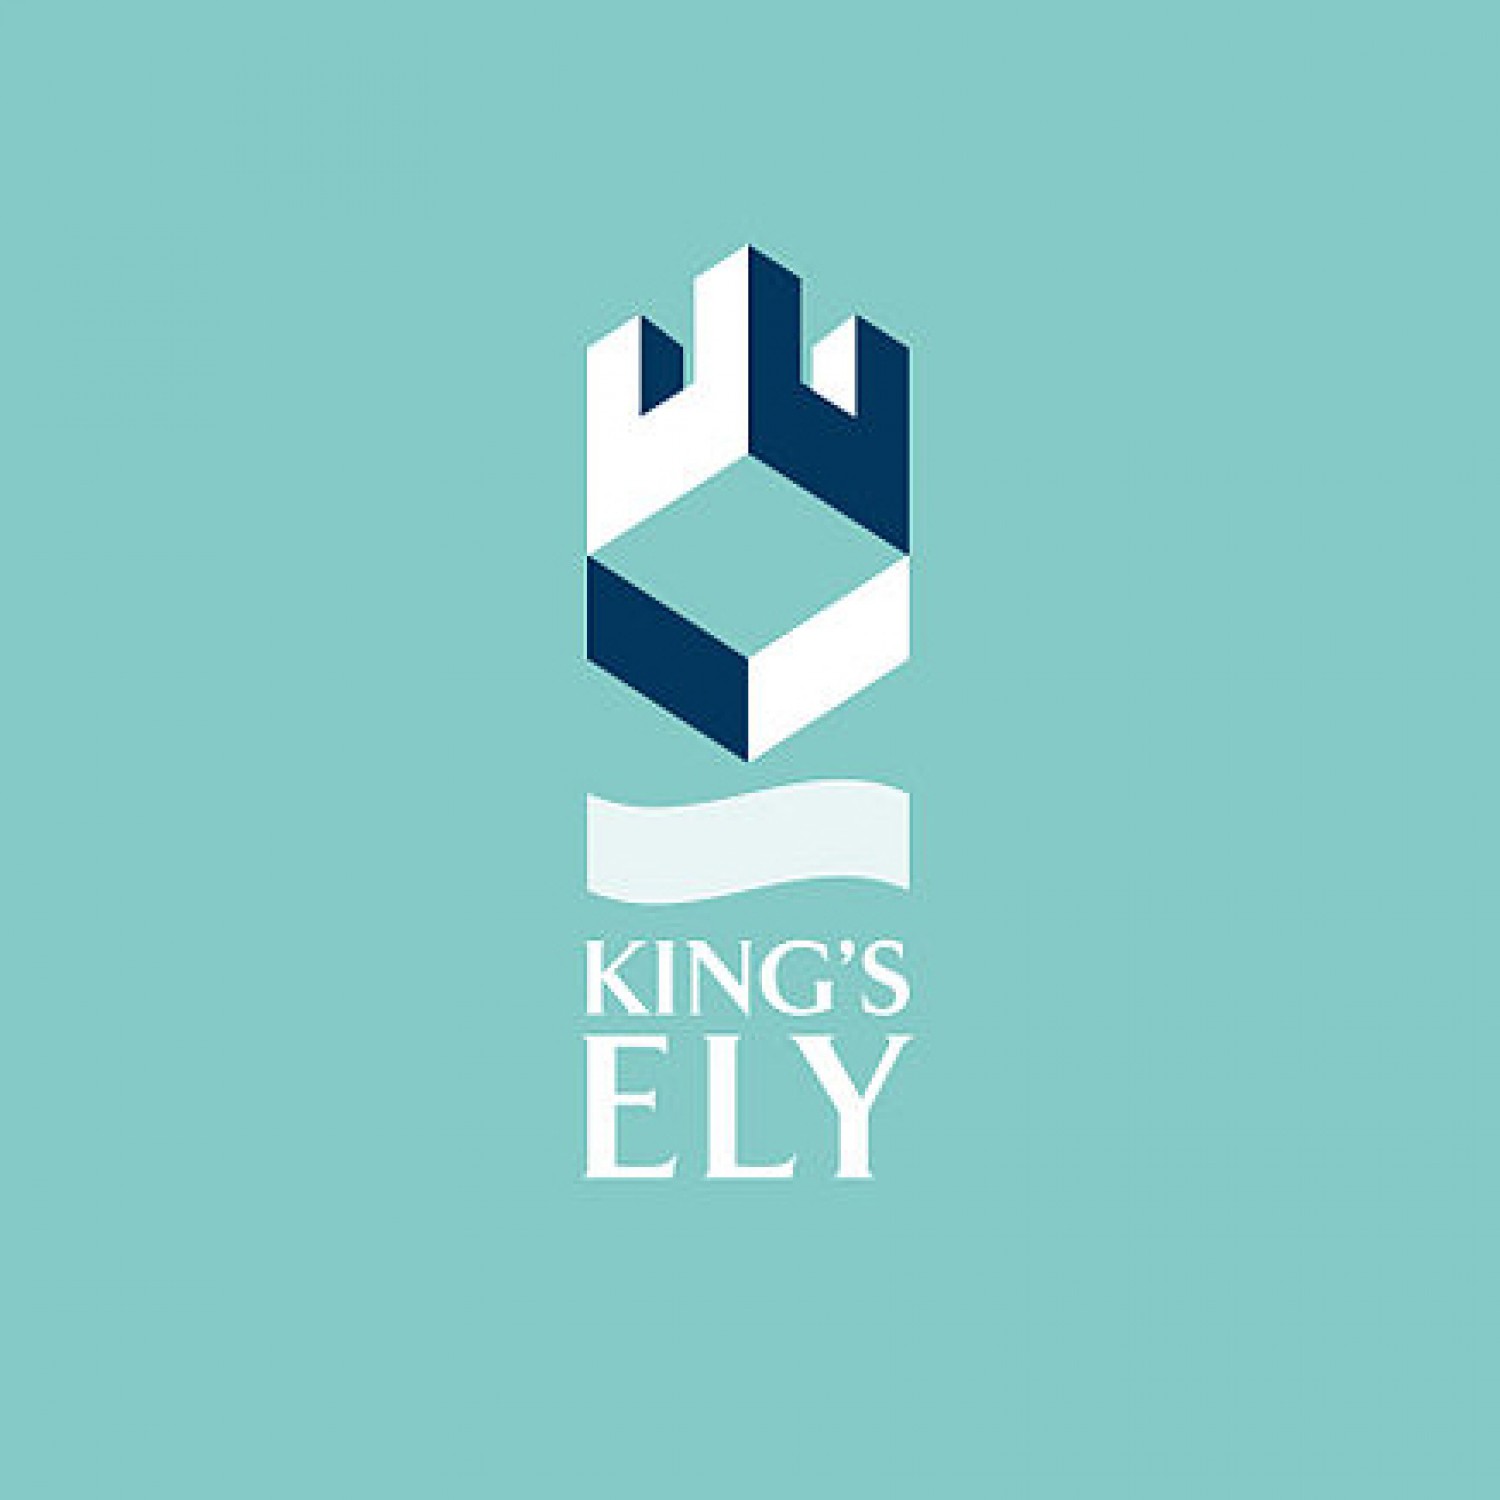 King's ely logo